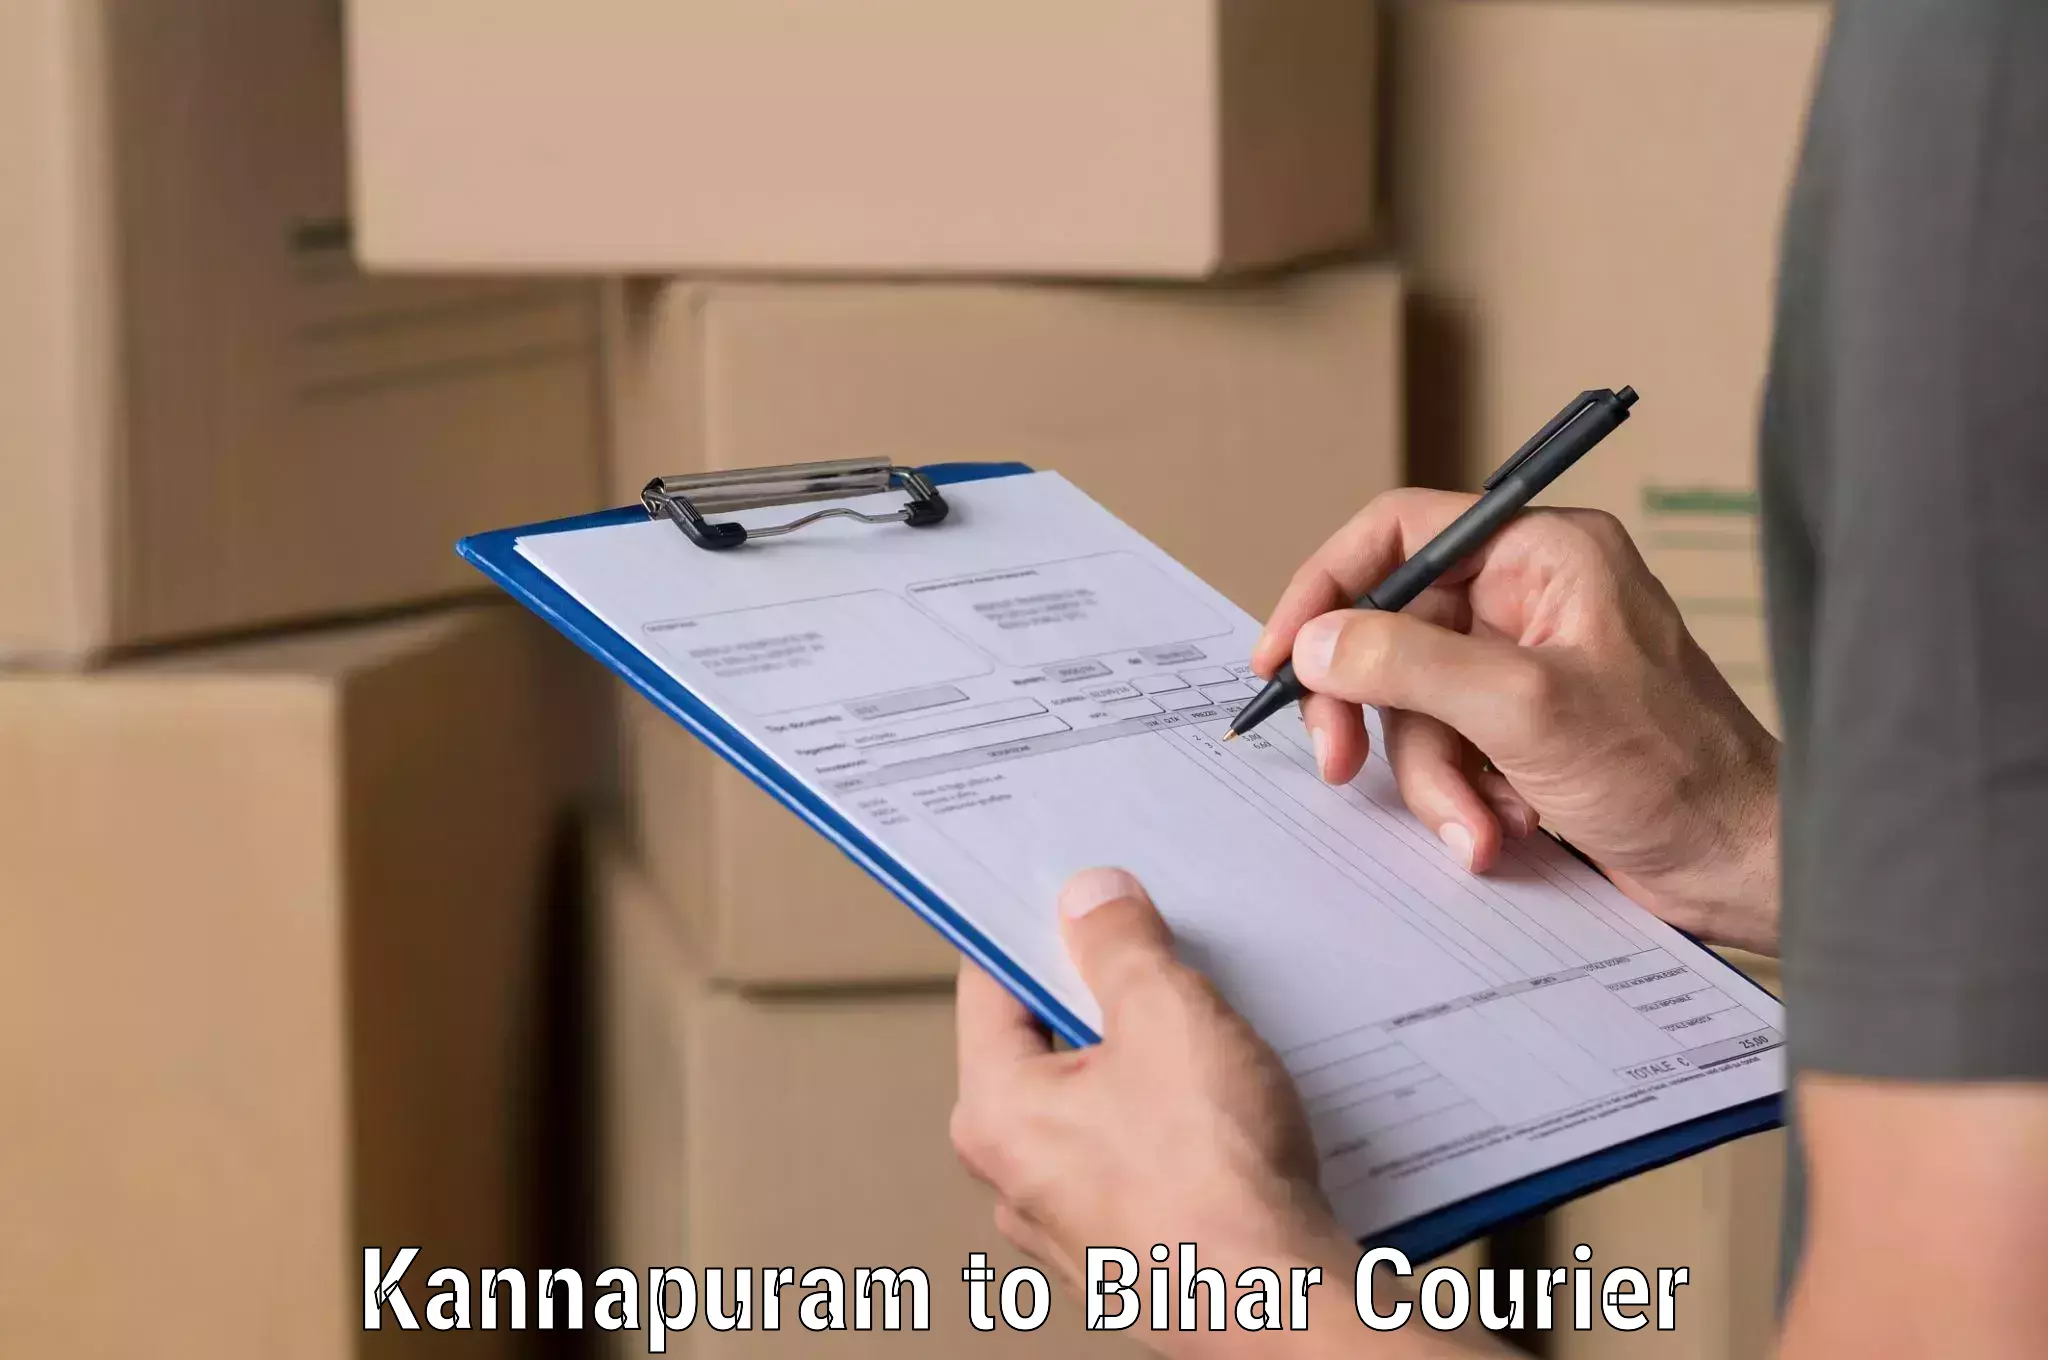 Local delivery service in Kannapuram to Bihar